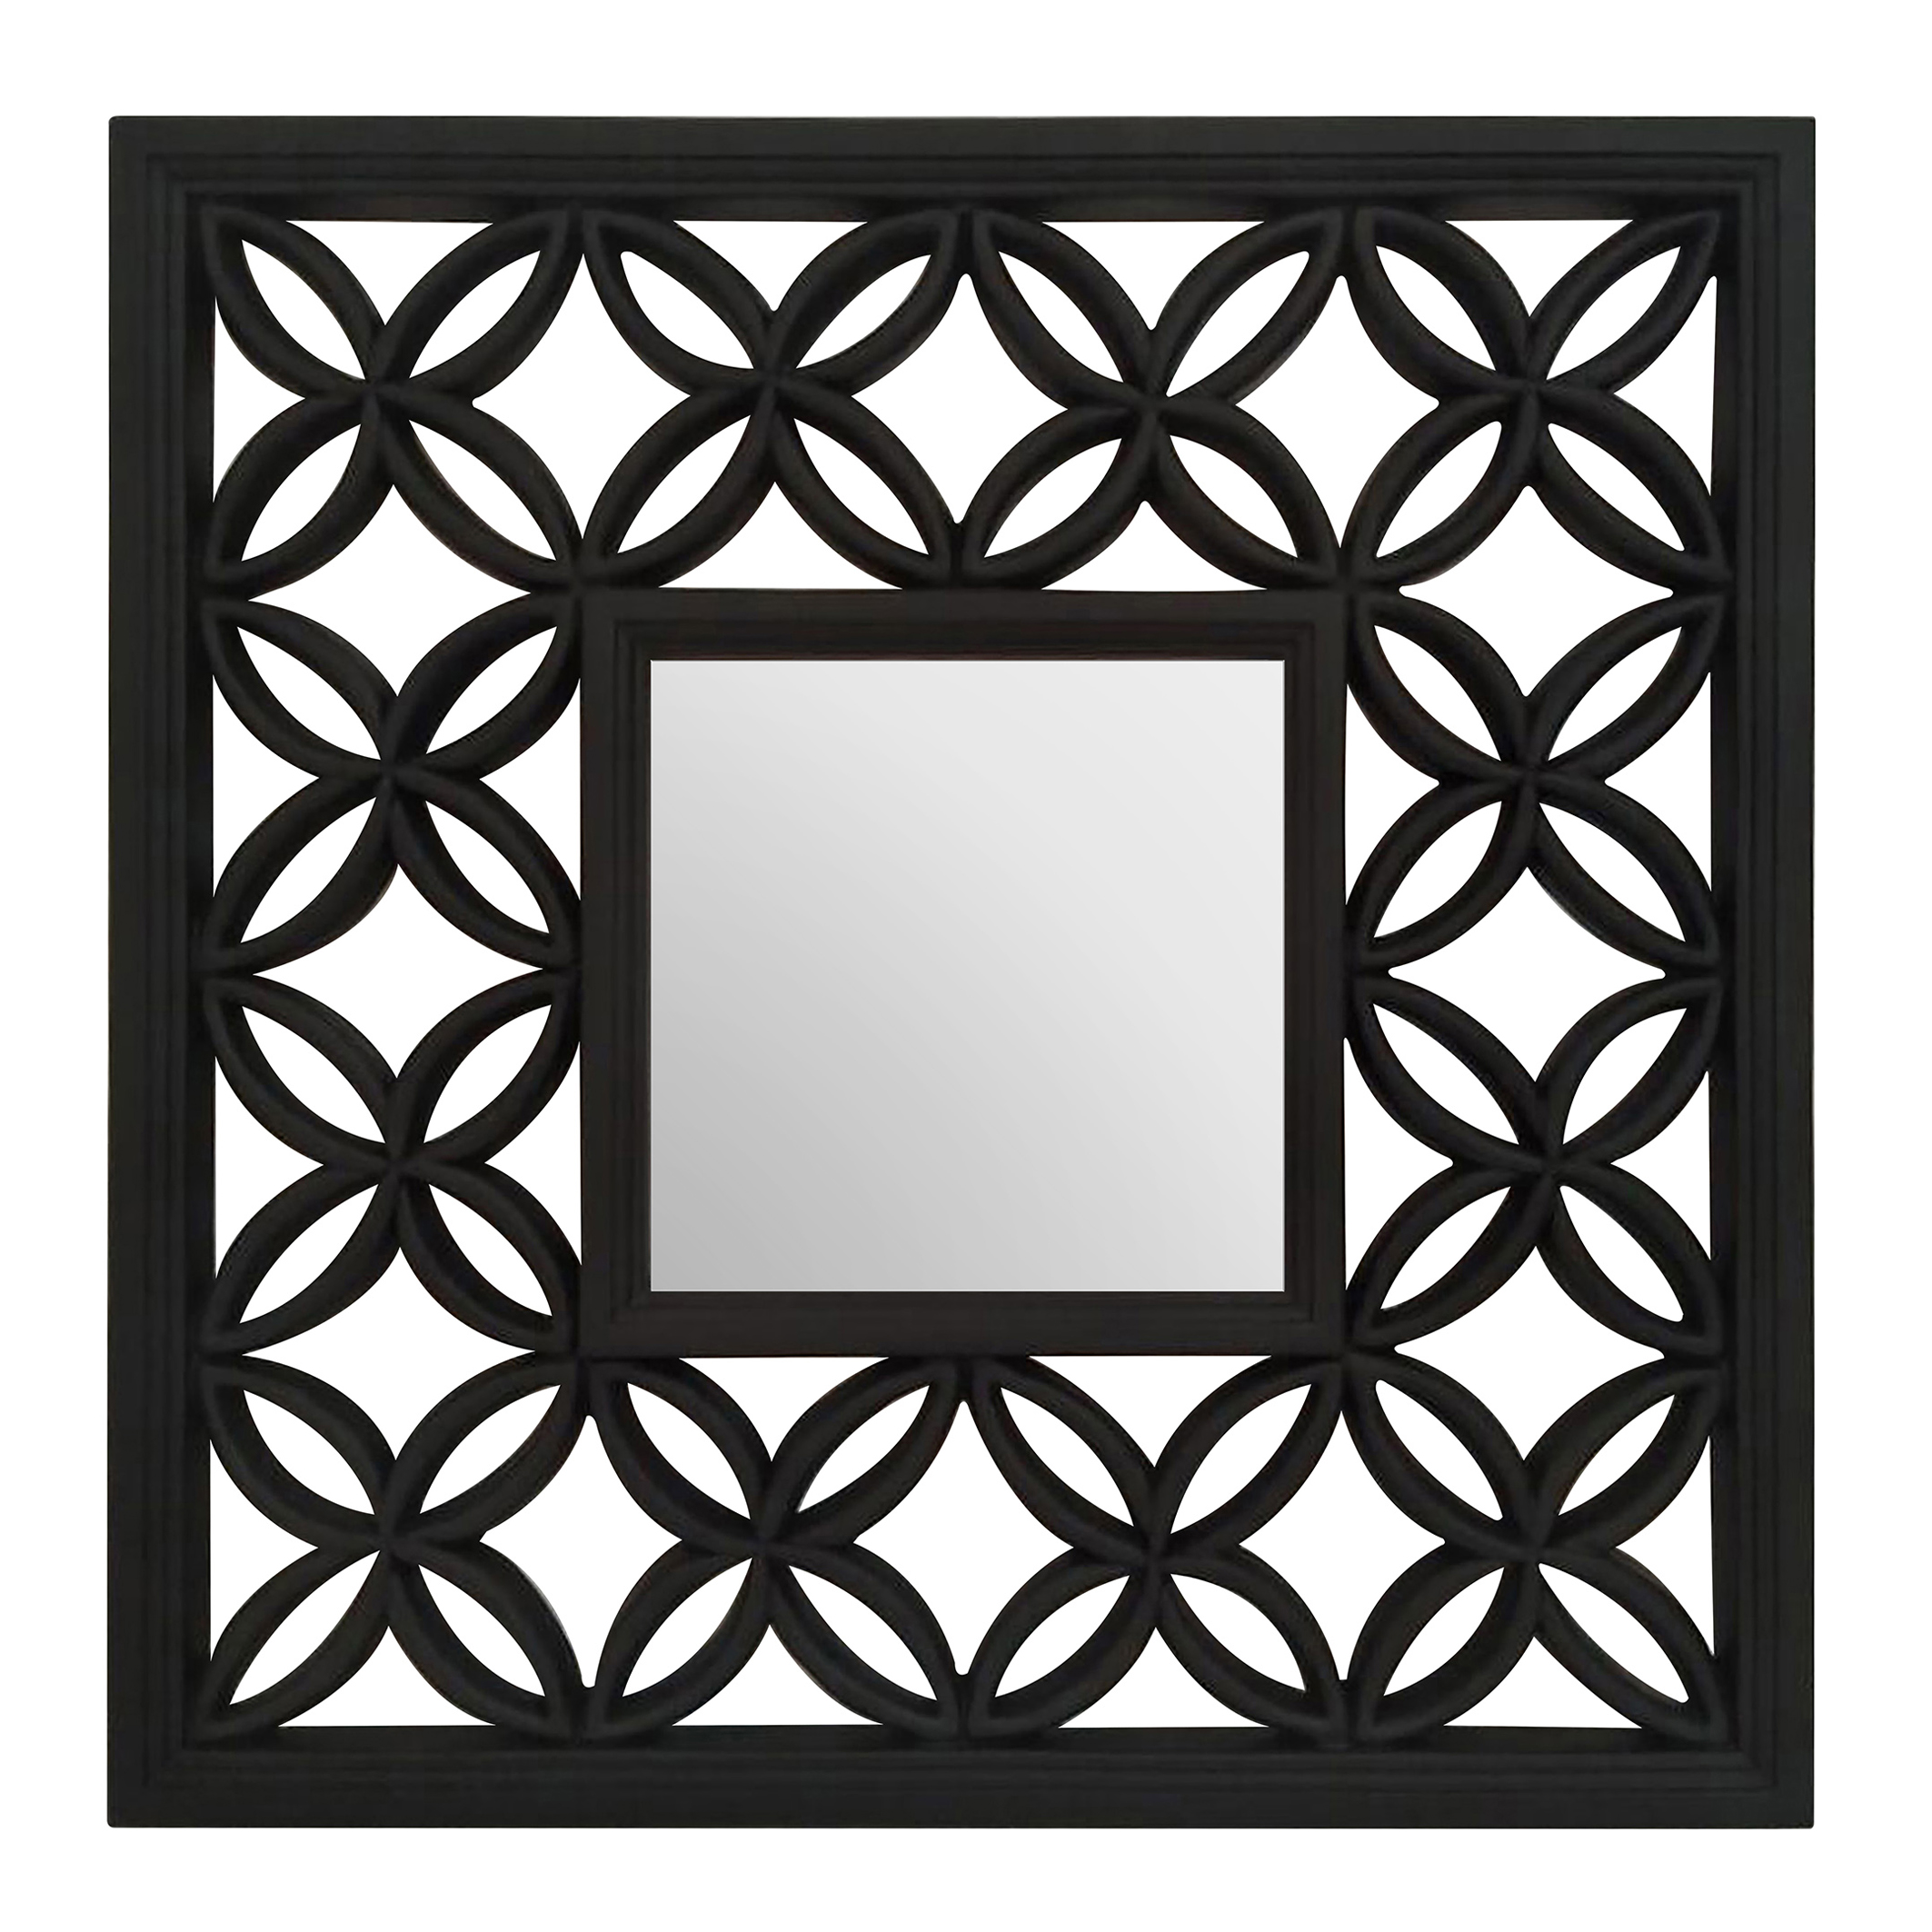 88cm Square Wall Mirror In Black, Wall Mirror Black Frame Square